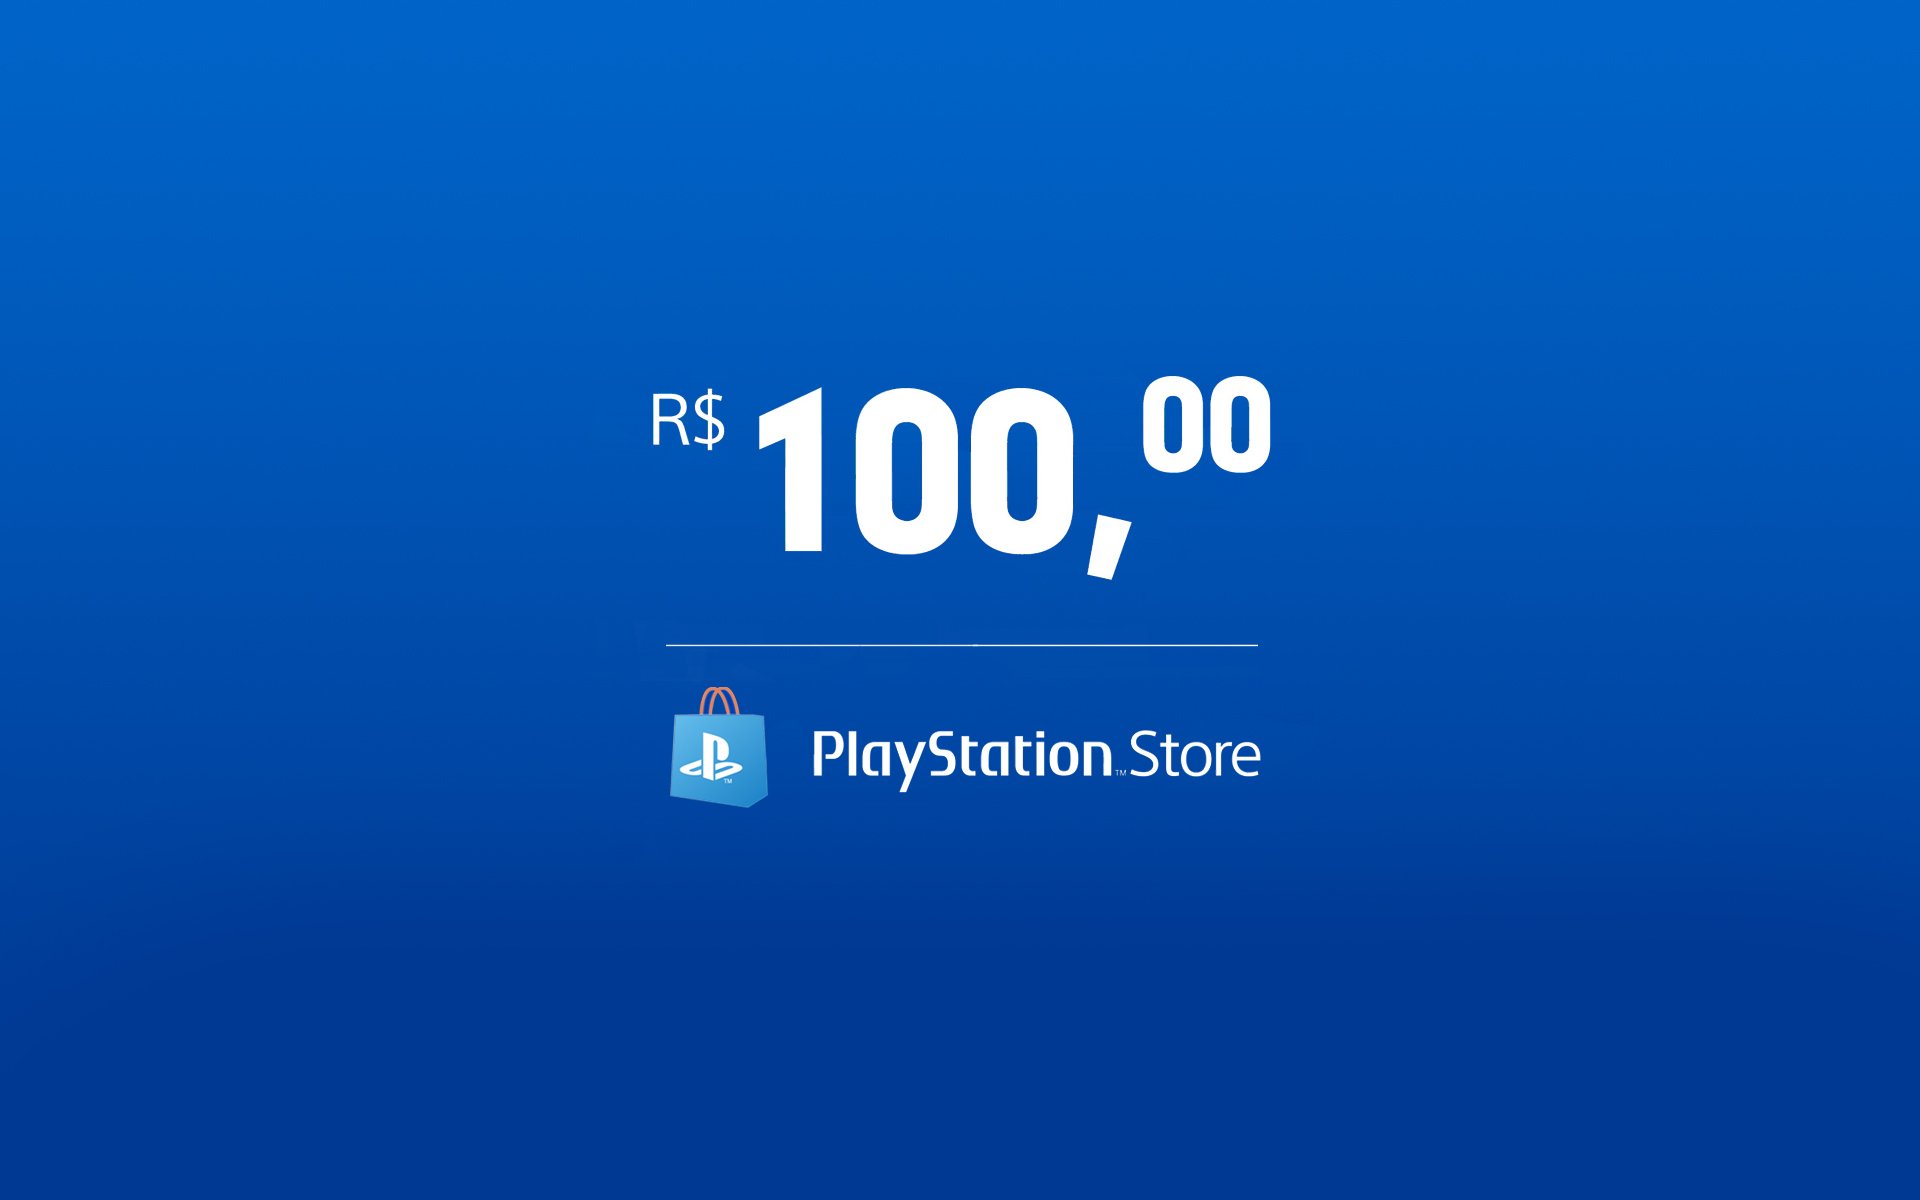 Comprar R$ 100 Reais Playstation Store Cartão Presente (BR) PSN Gift Card